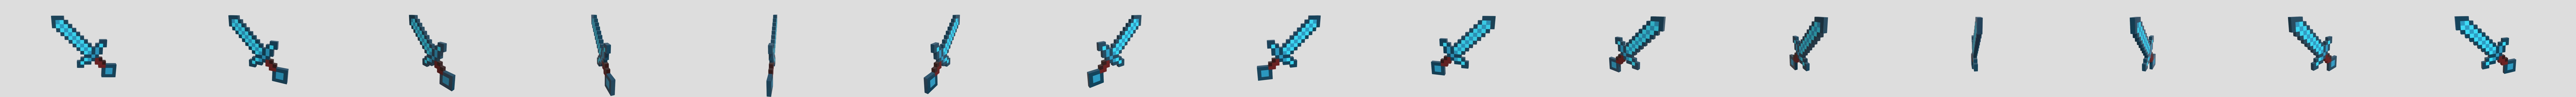 Diamond Sword for Minecraft (H23QTW74F) by AJman14